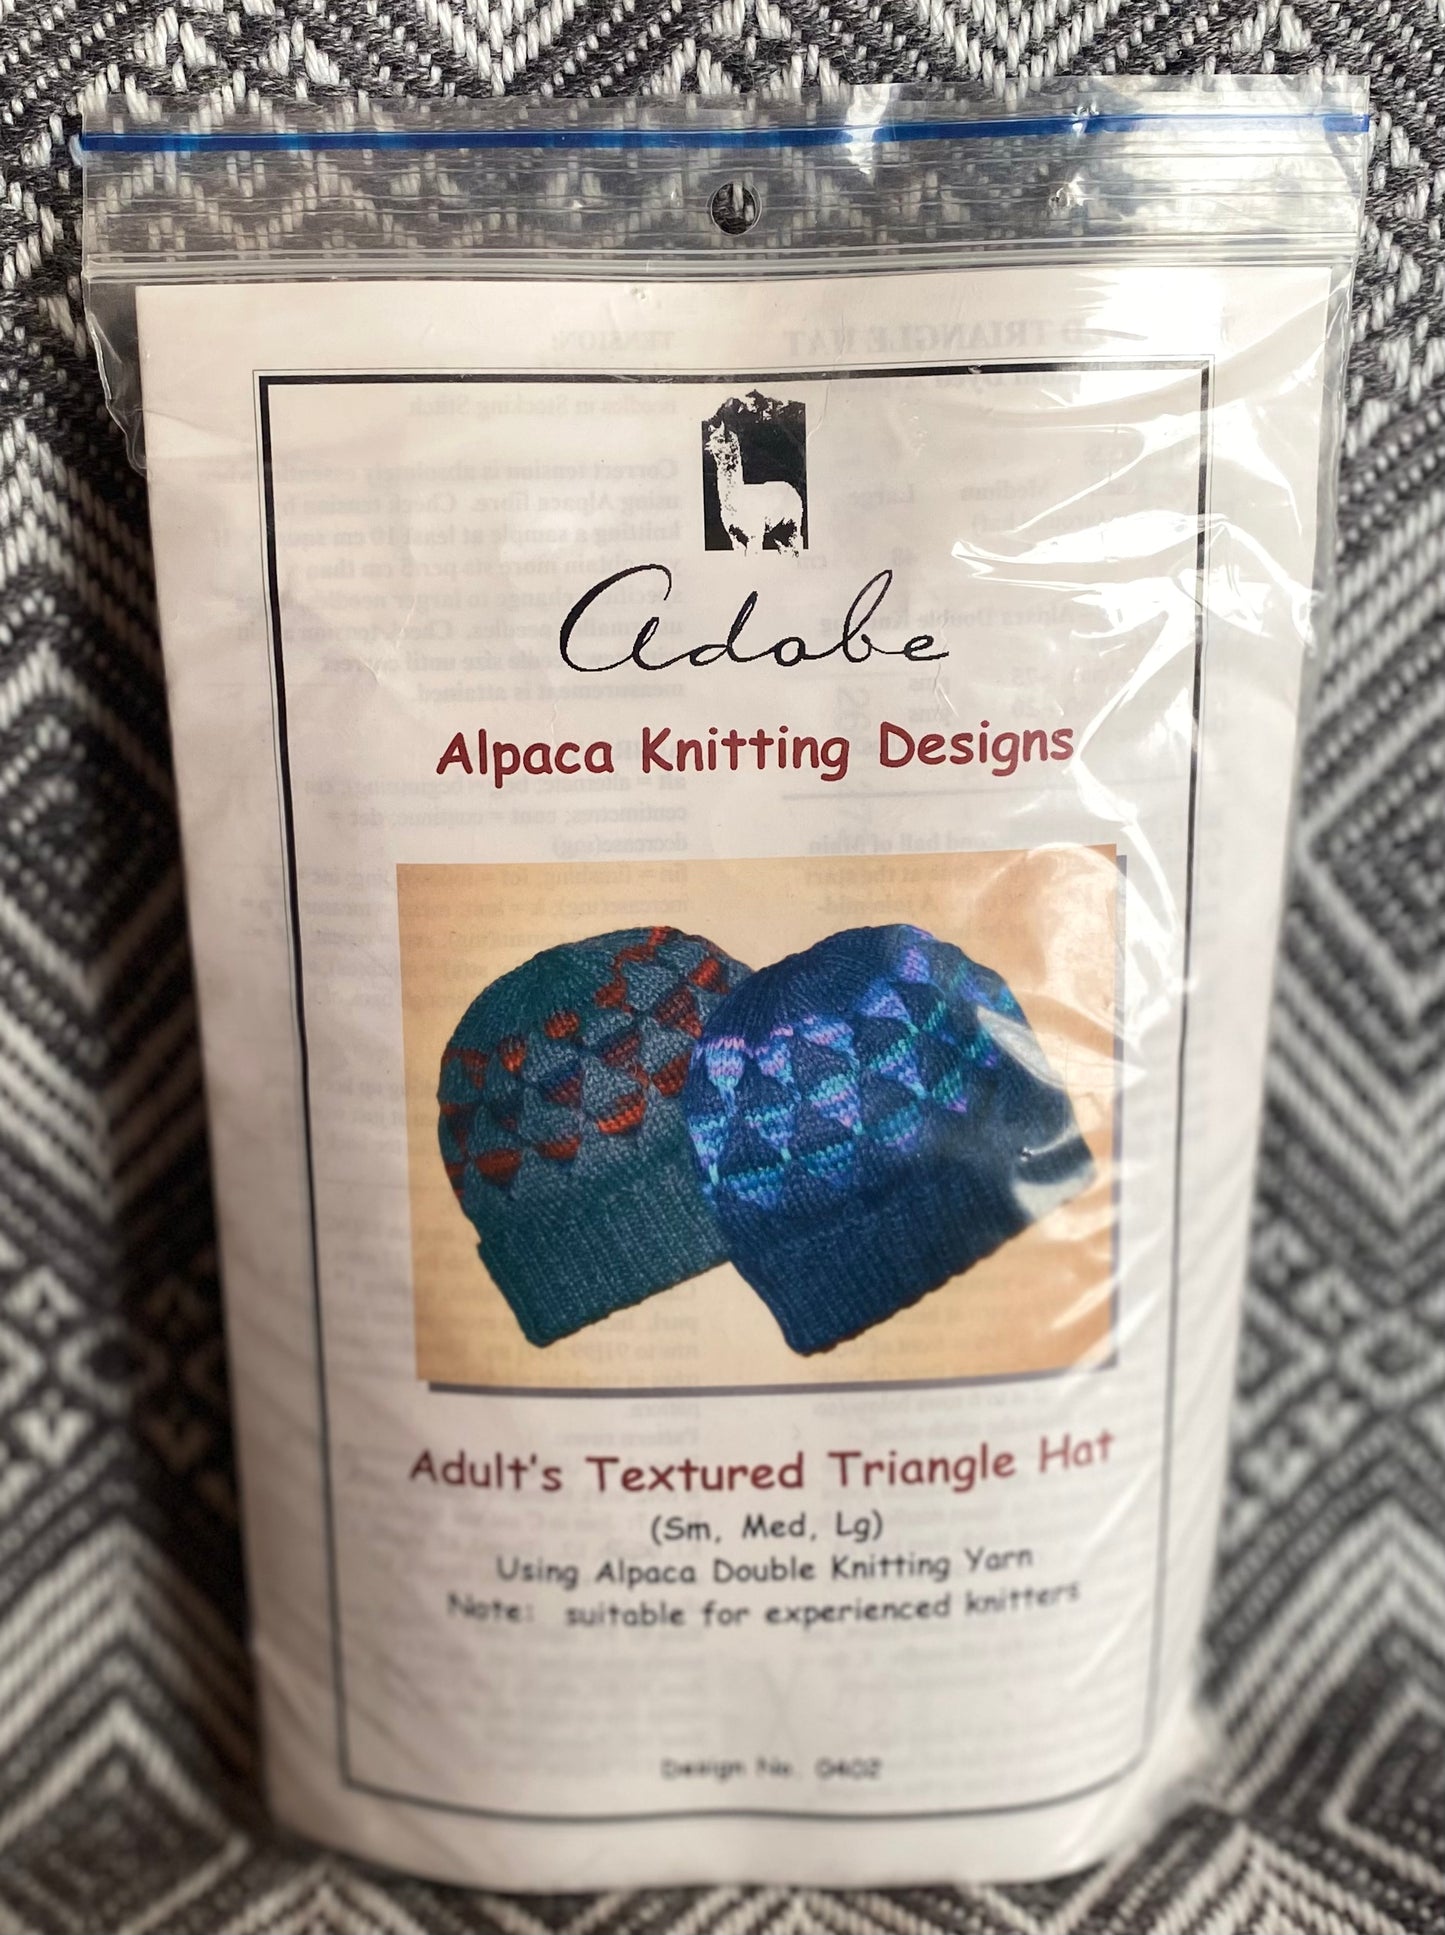 Adobe Knitting Kits